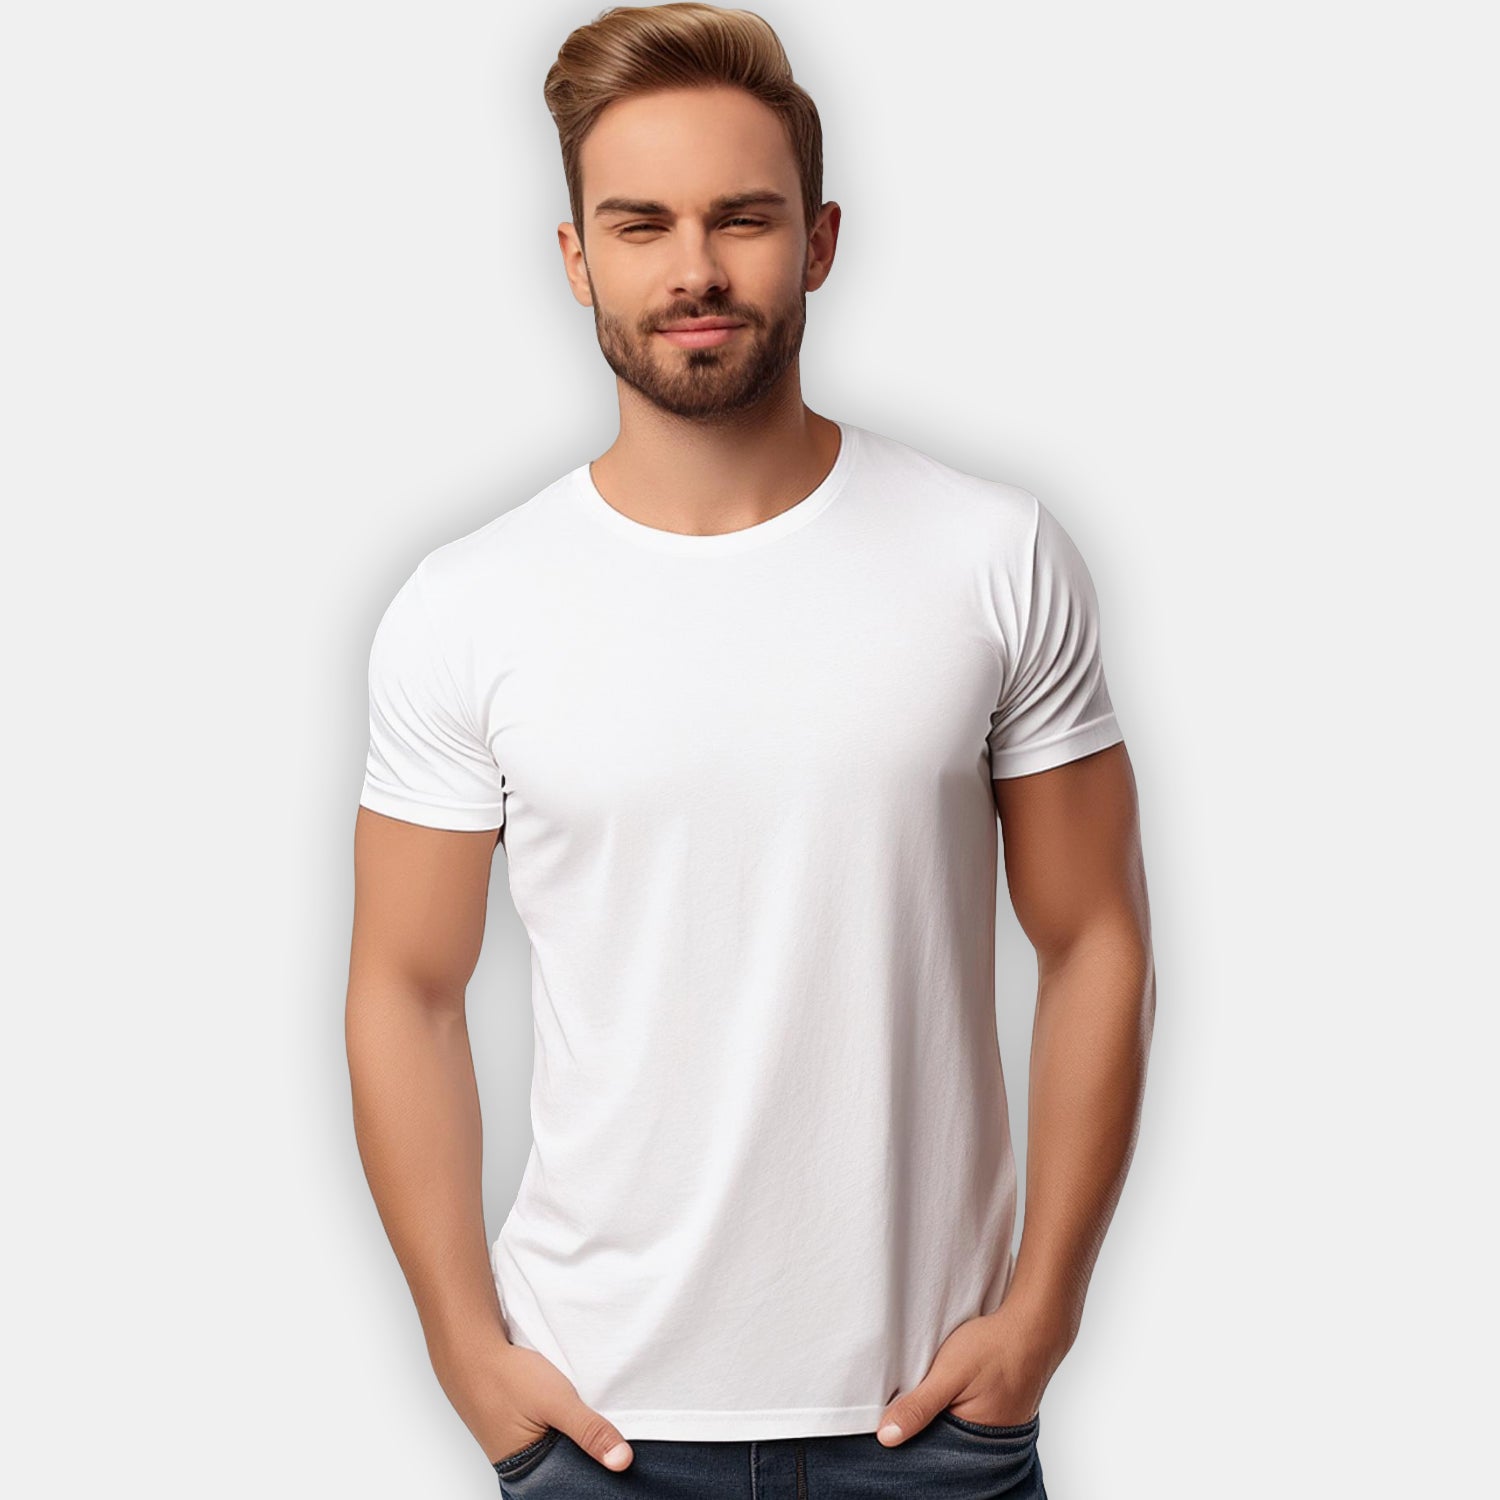 Men's Plain White T-Shirt